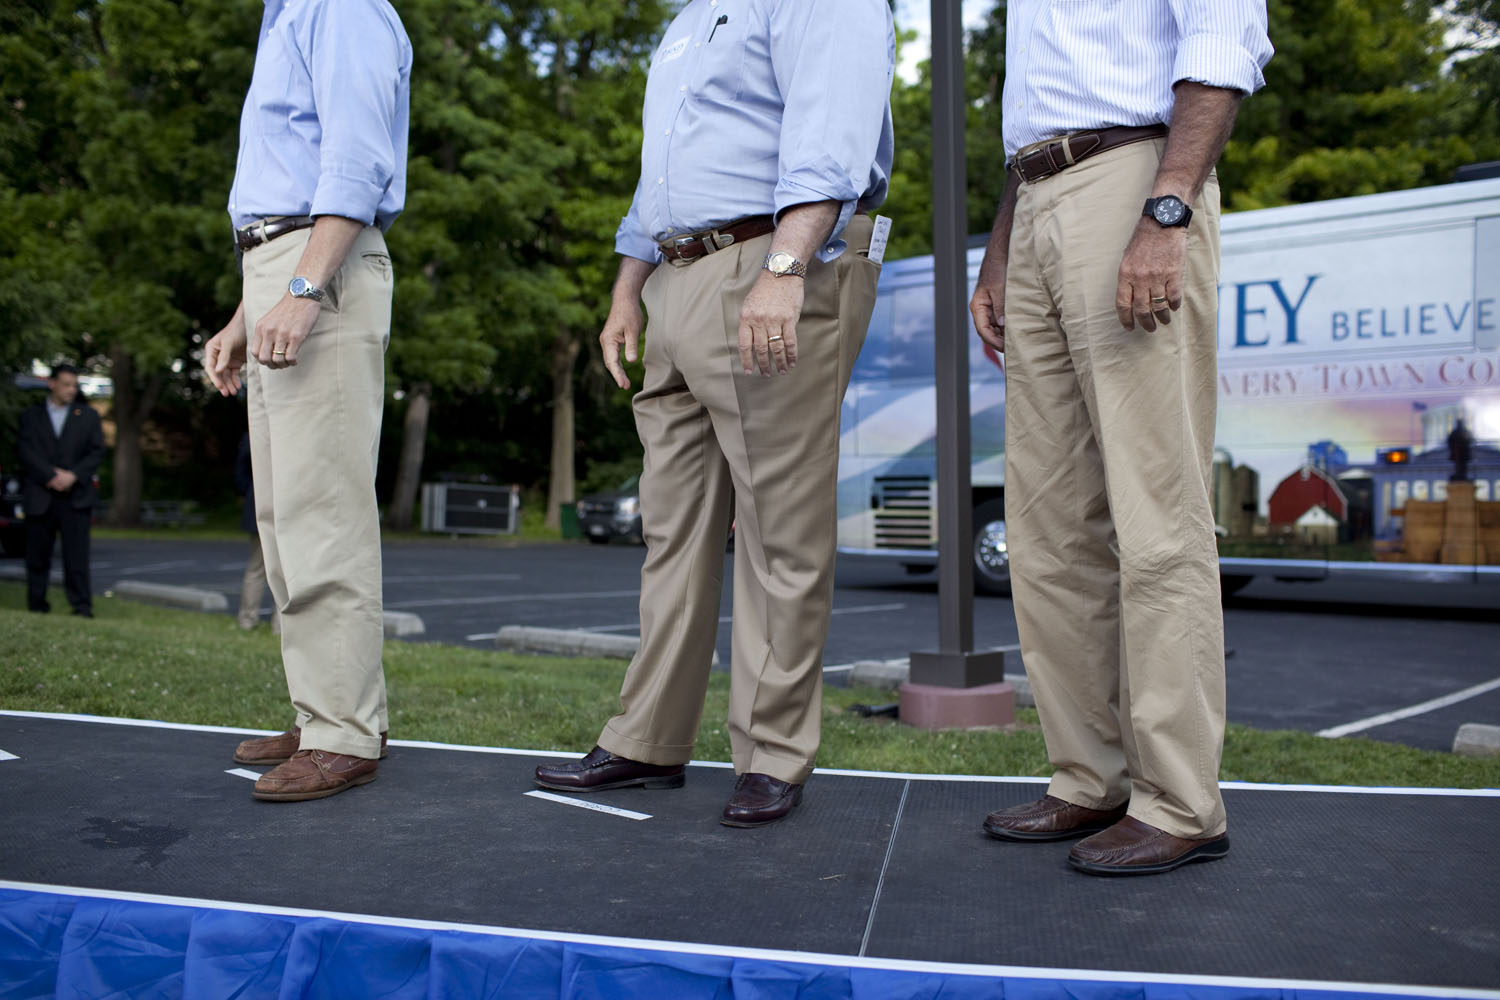 Image: Mitt Romney campaigns in Cornwall, Pa. alongside senator Pat Toomey and Pennsylvania governor Tom Corbett. June 16, 2012.